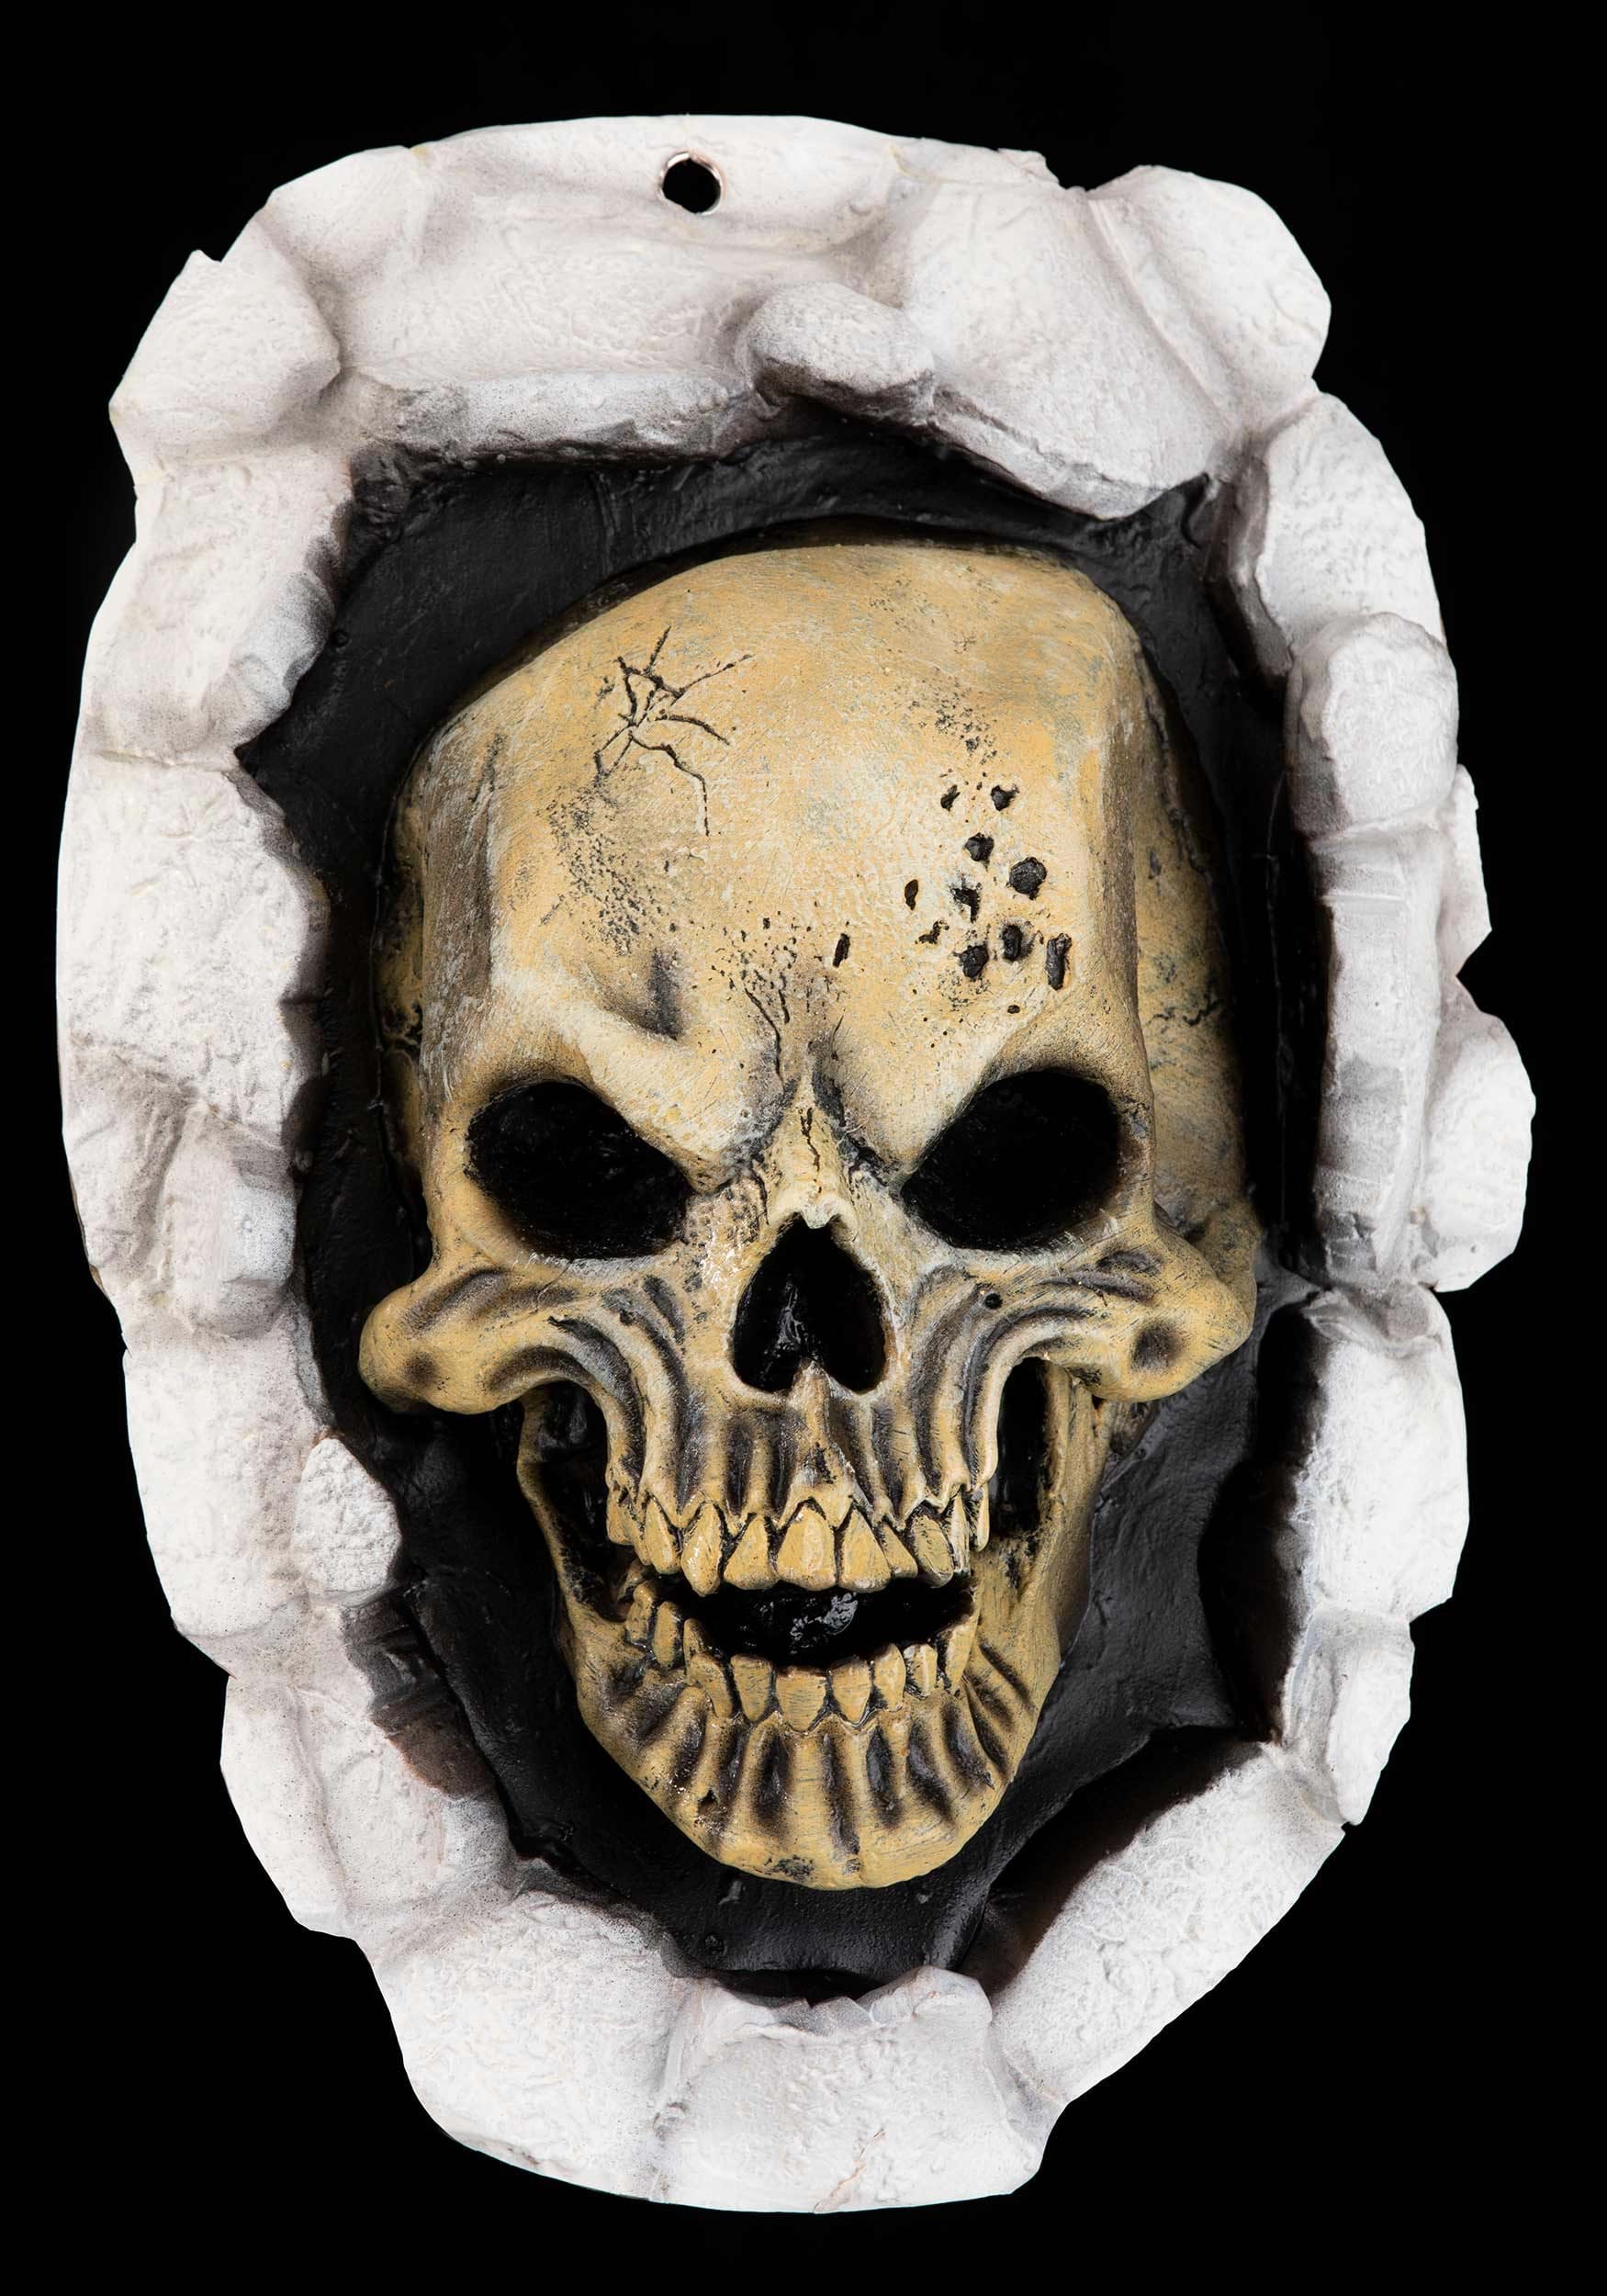 Skull Wall Halloween Decoration